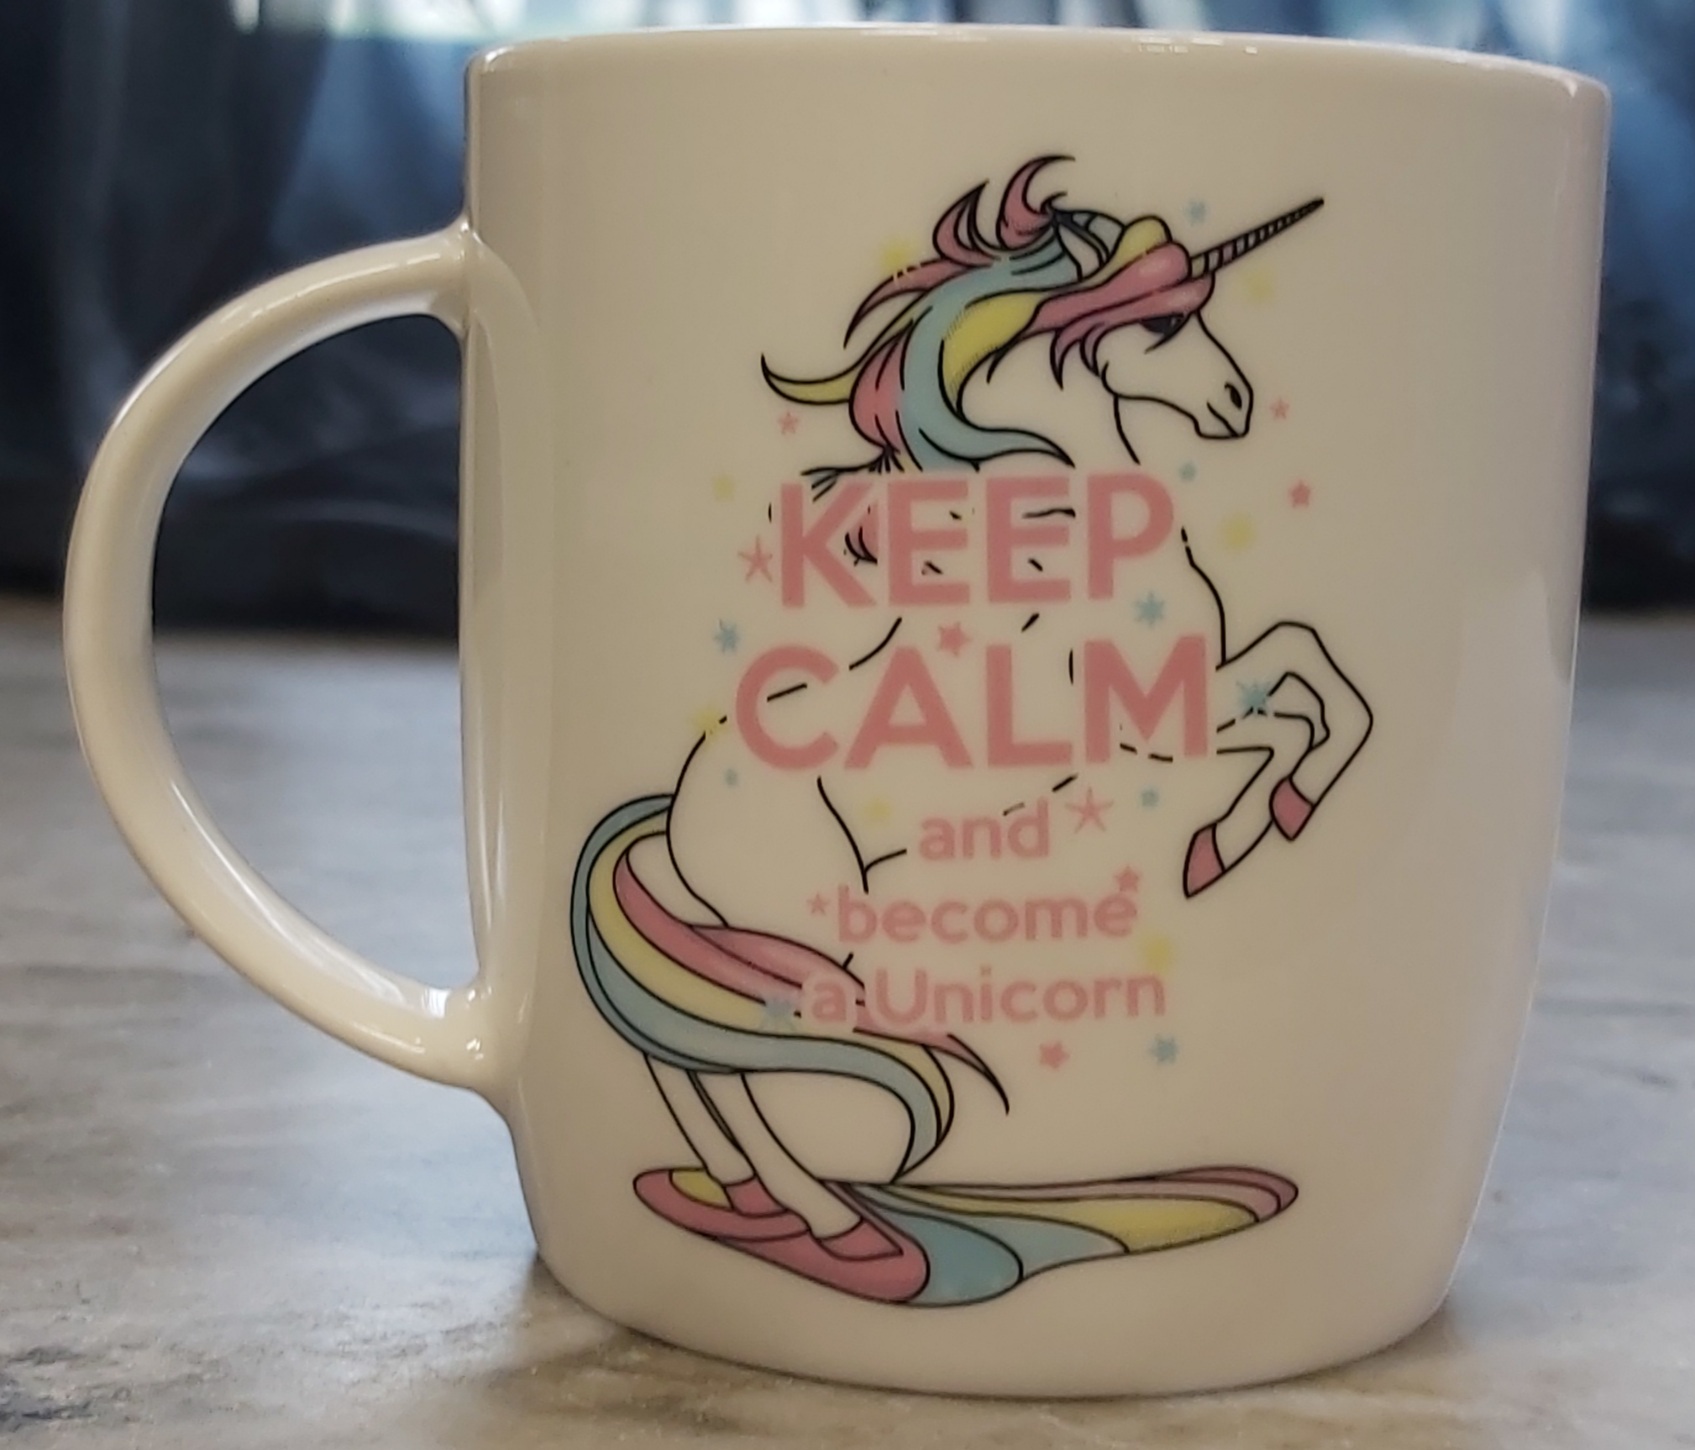 Keep Calm and become a unicorn Mugg